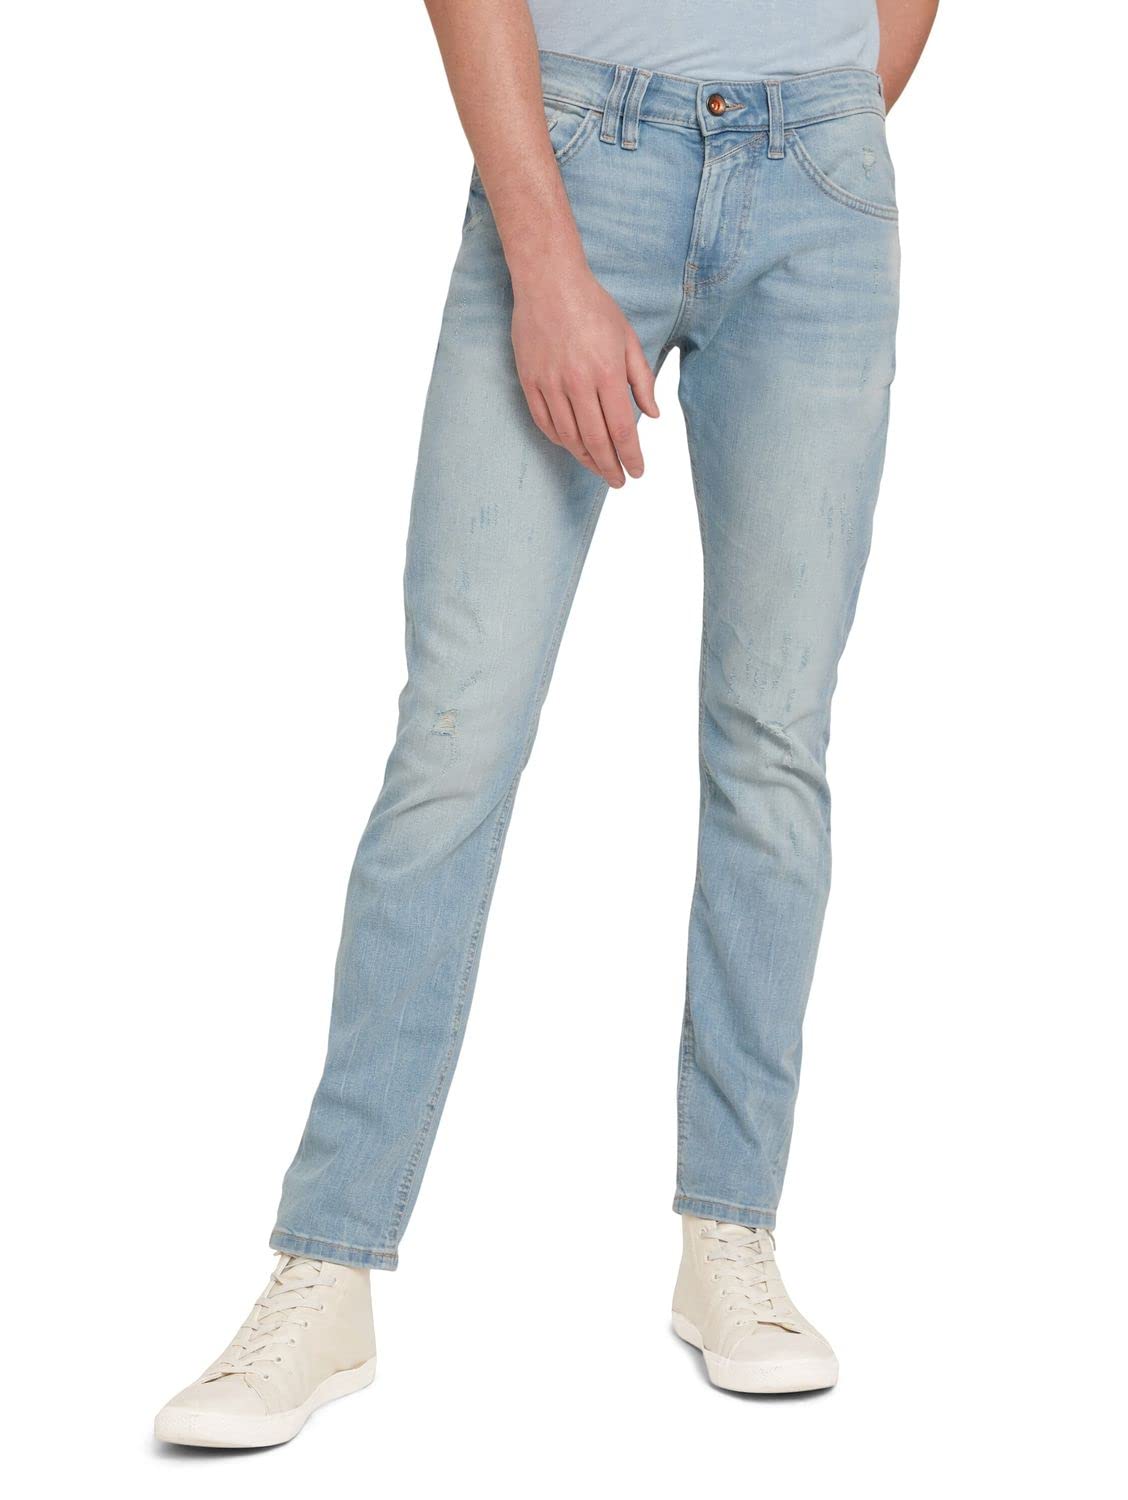 TOM TAILOR Denim Herren Piers Slim Jeans 1029730, 10117 - Used Bleached Blue Denim, 29W / 32L